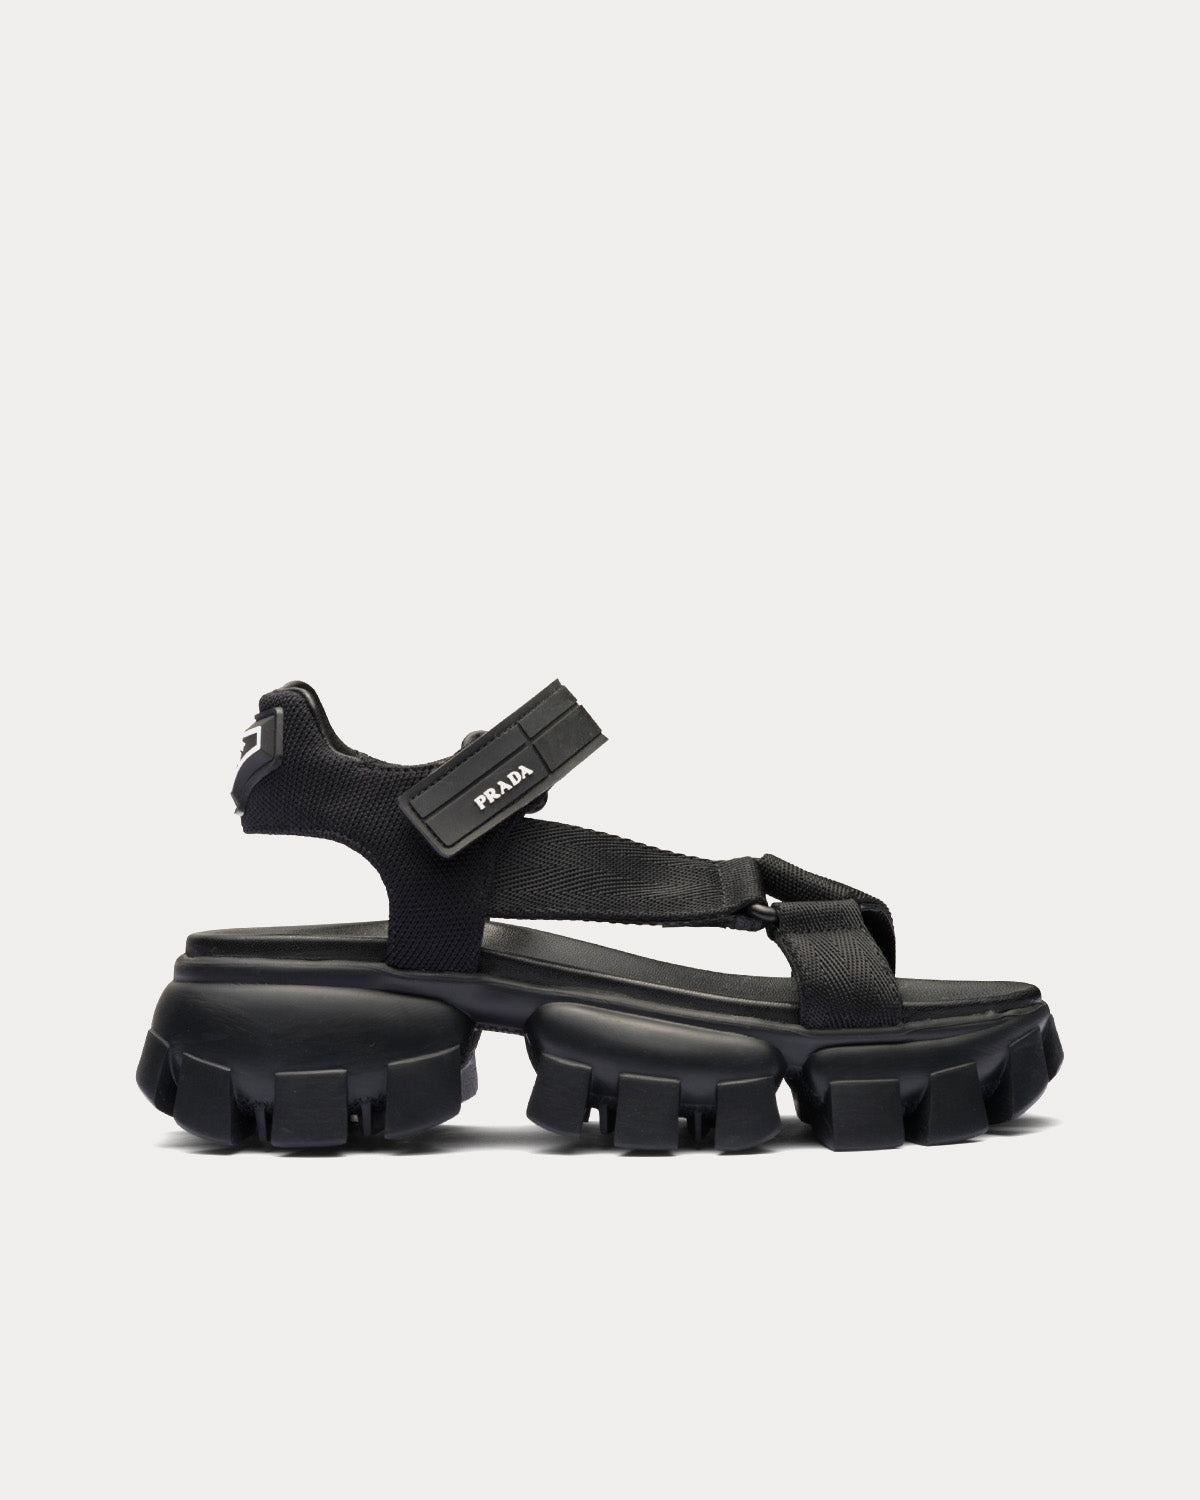 Monarch To grader Kriger Prada Sporty Woven Nylon Tape Black Sandals - Sneak in Peace